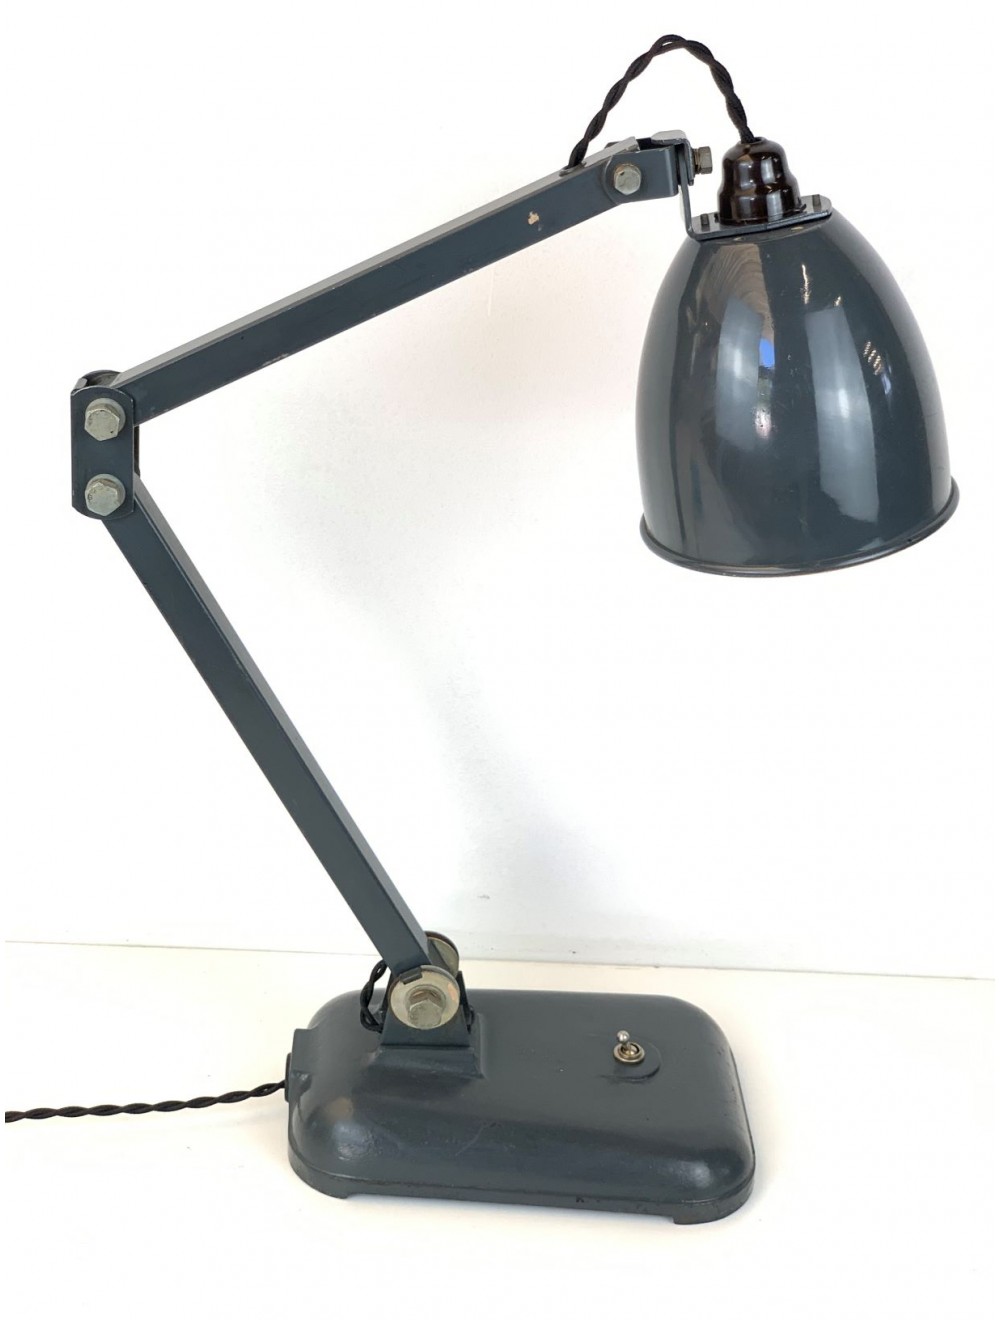 MEMLITE lampe de marque anglaise de 1950